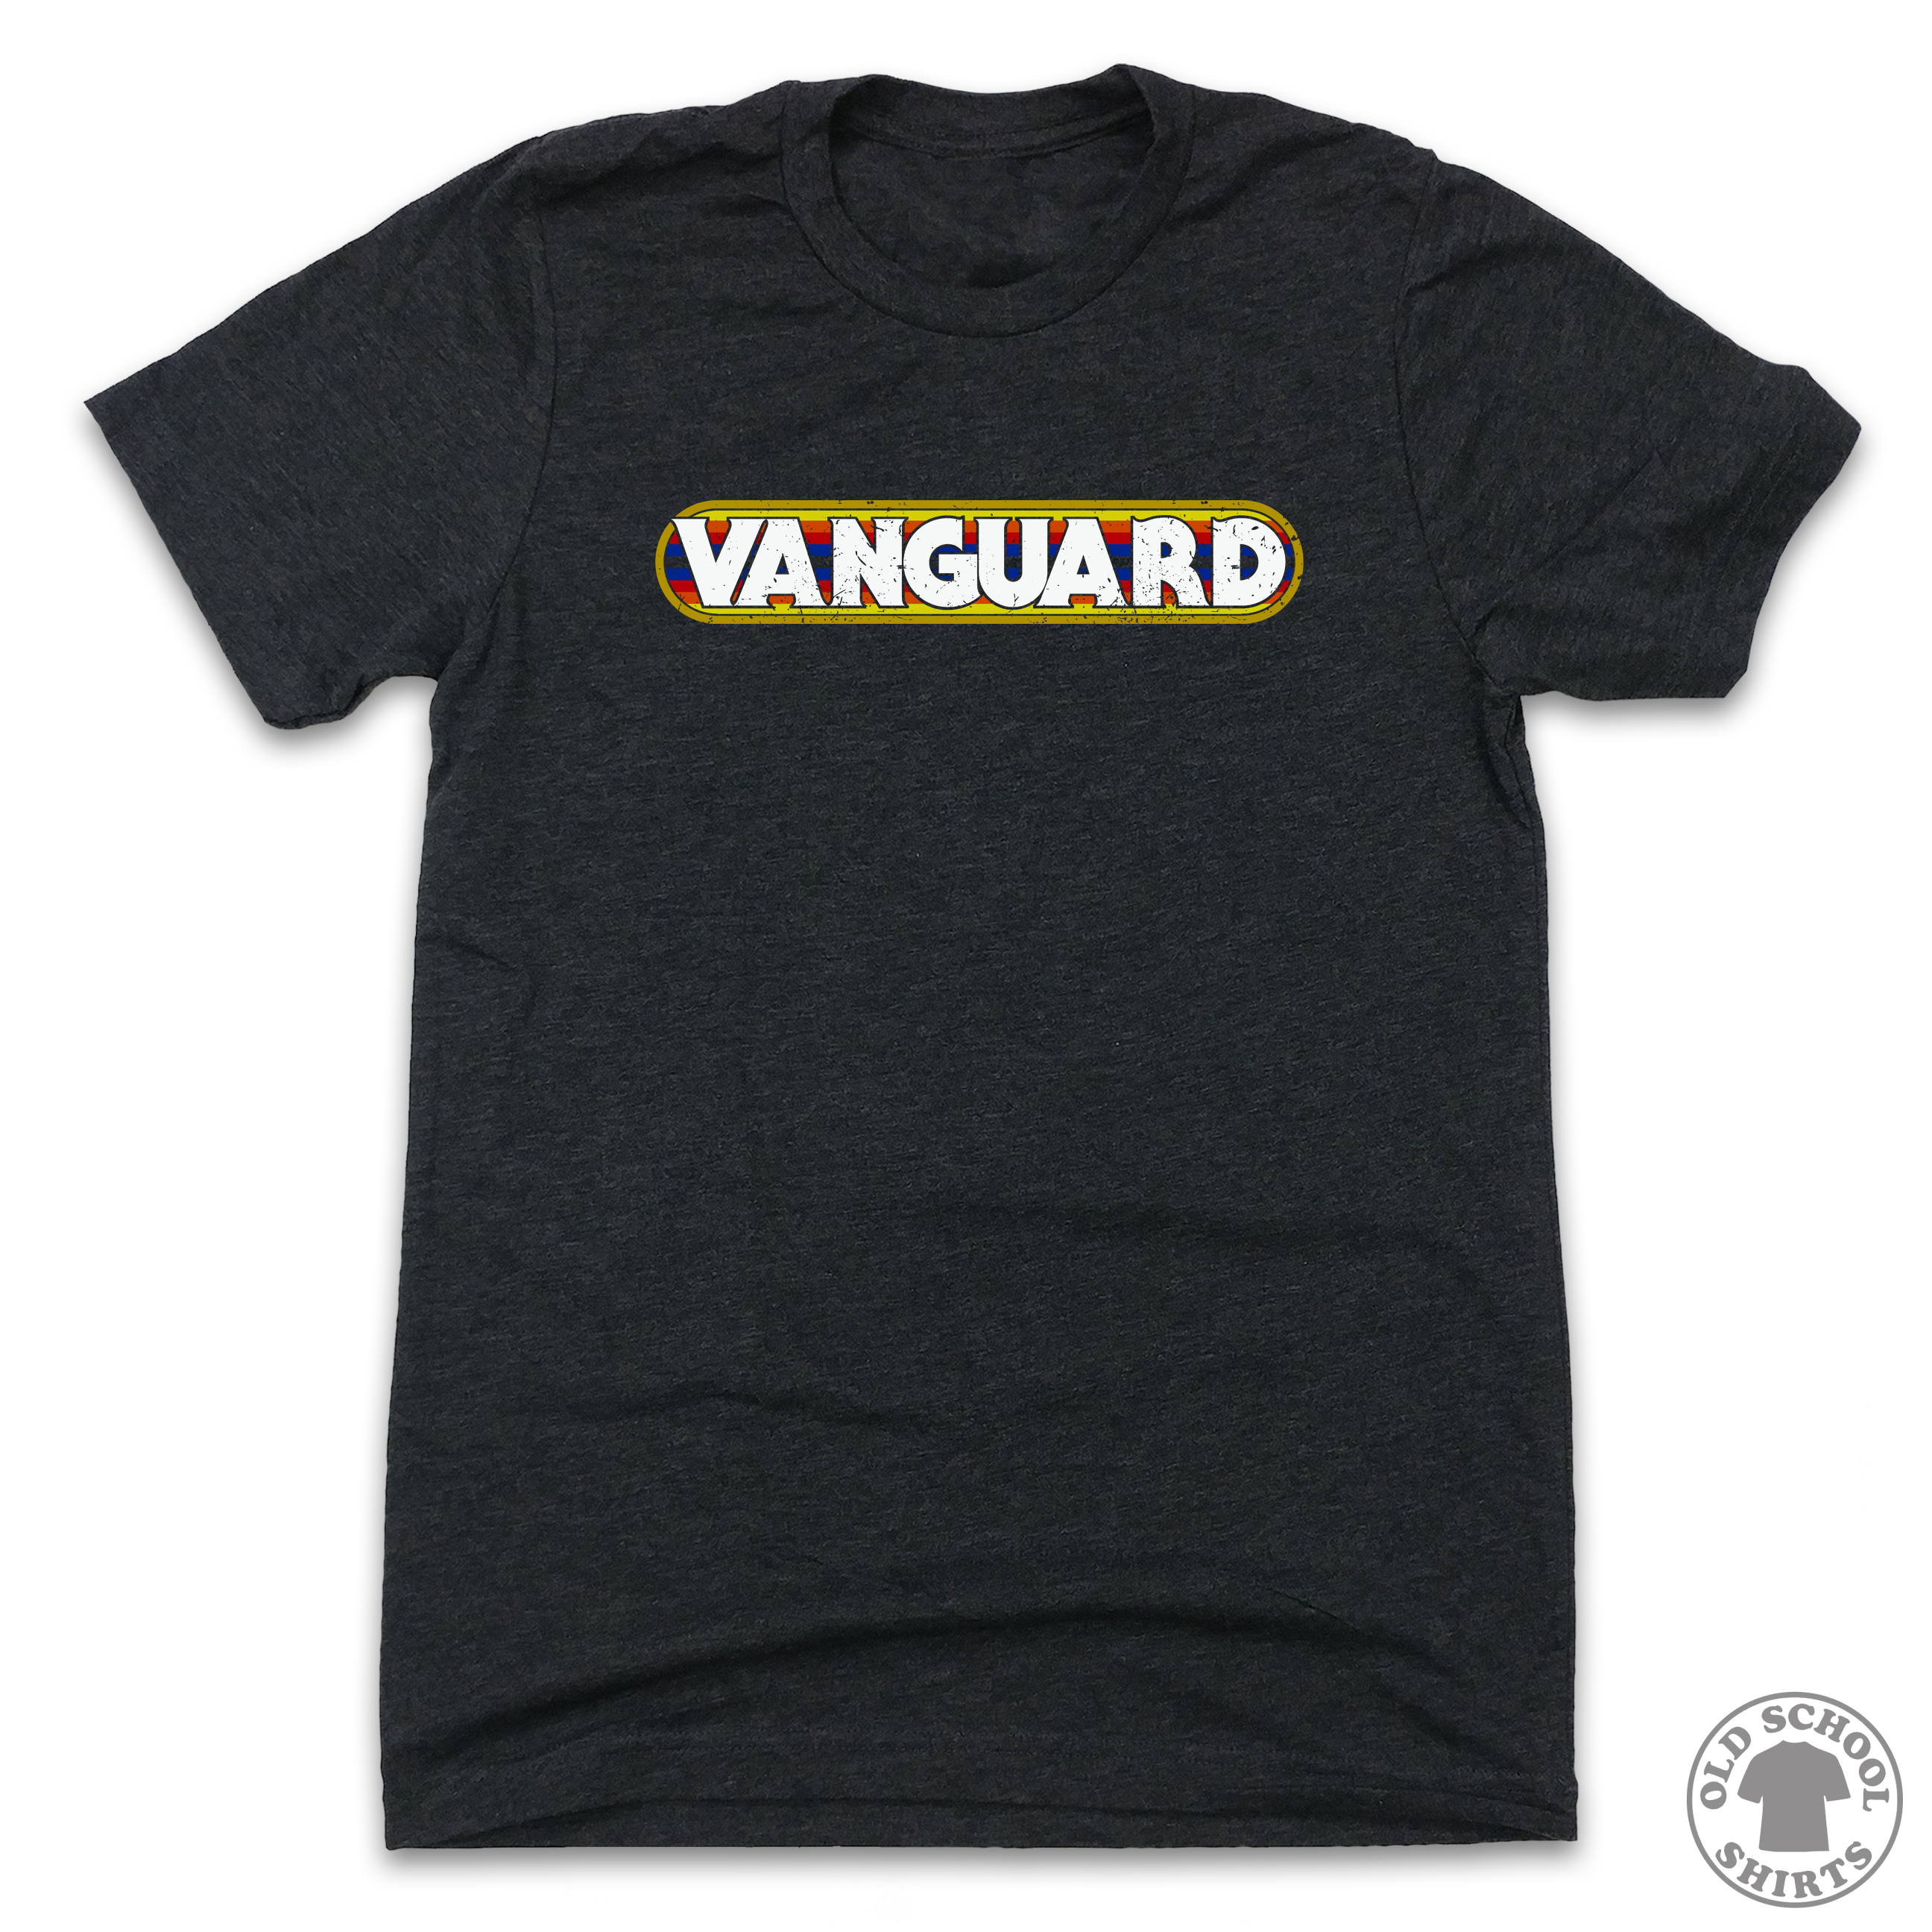 Vanguard arcade game T-shirt